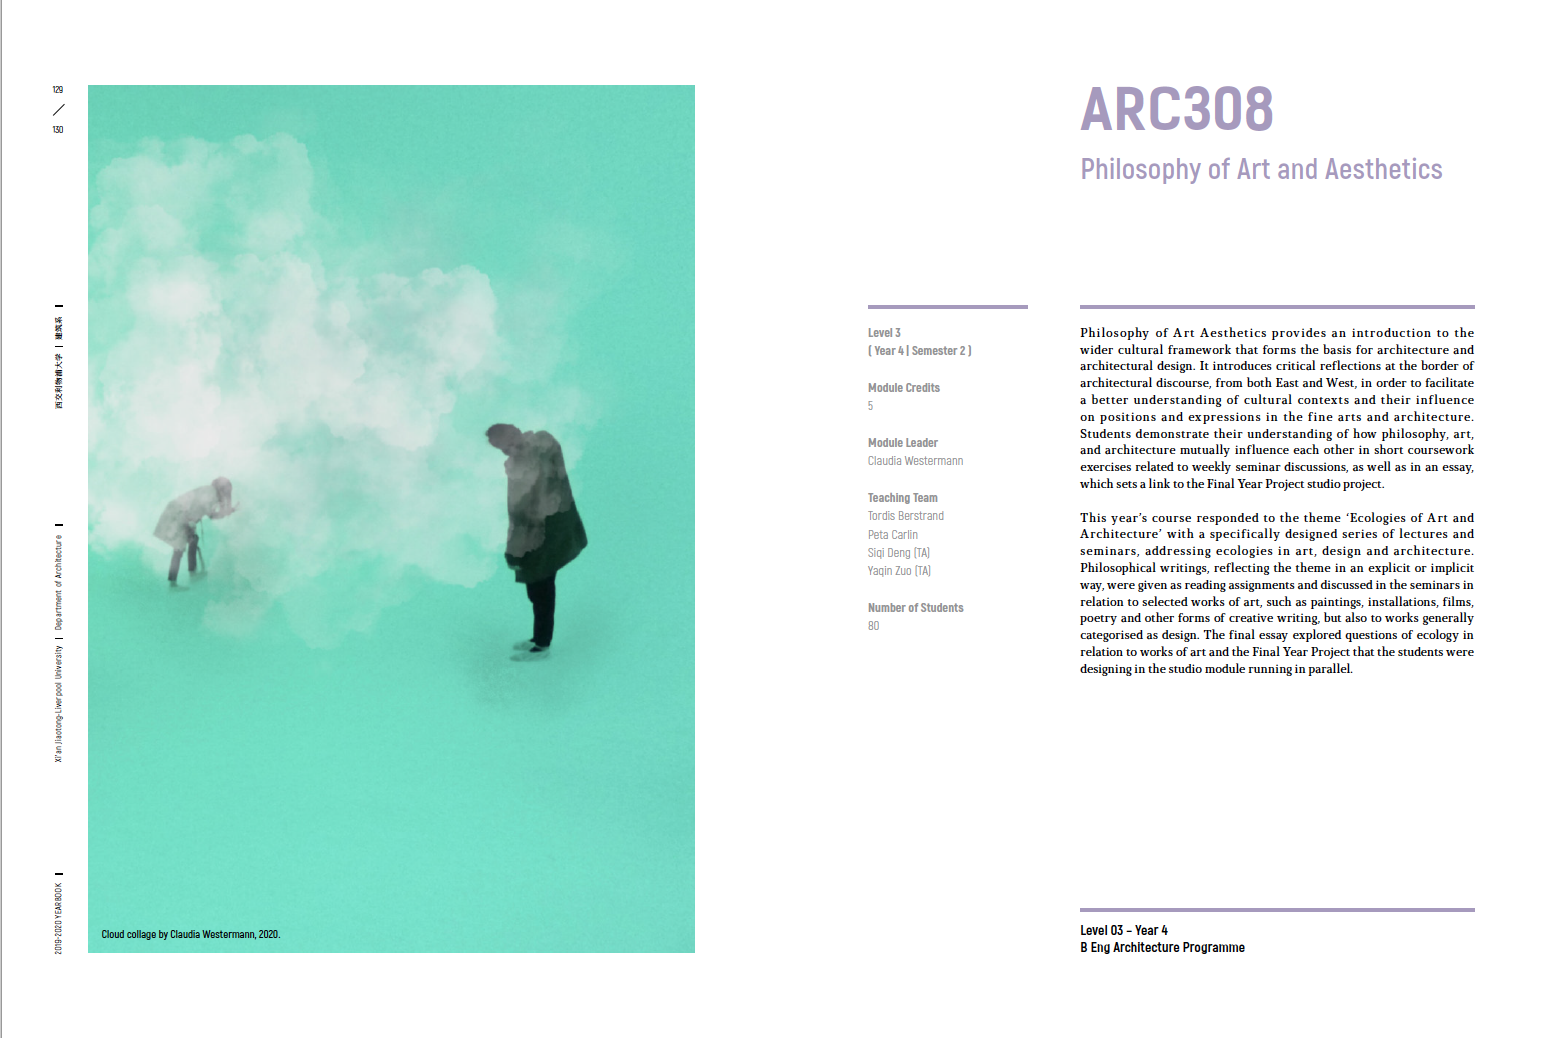 ARC308 Philosophy of Art and Aesthetics